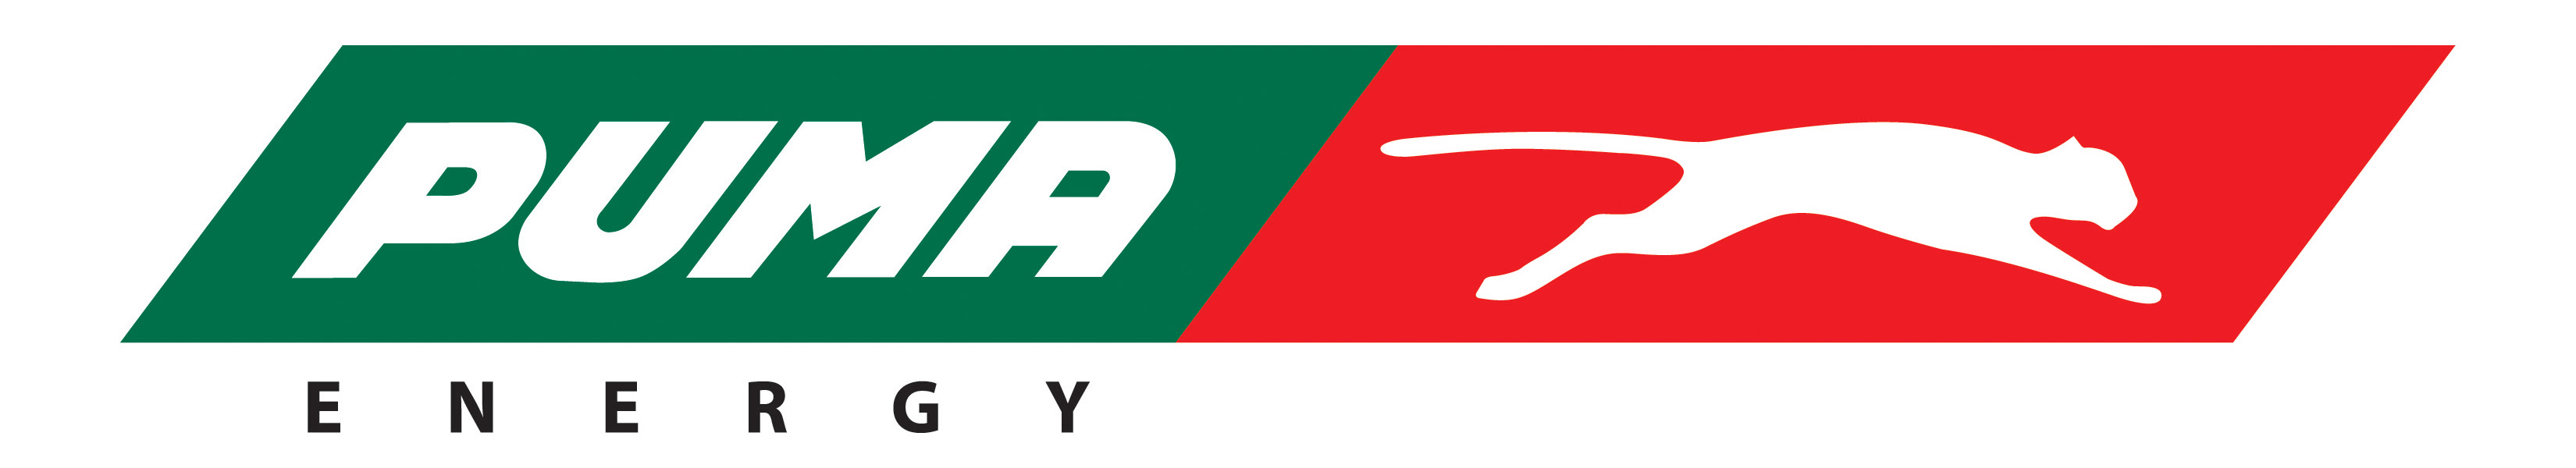 File:Puma Energy Logo.jpg - Wikimedia Commons